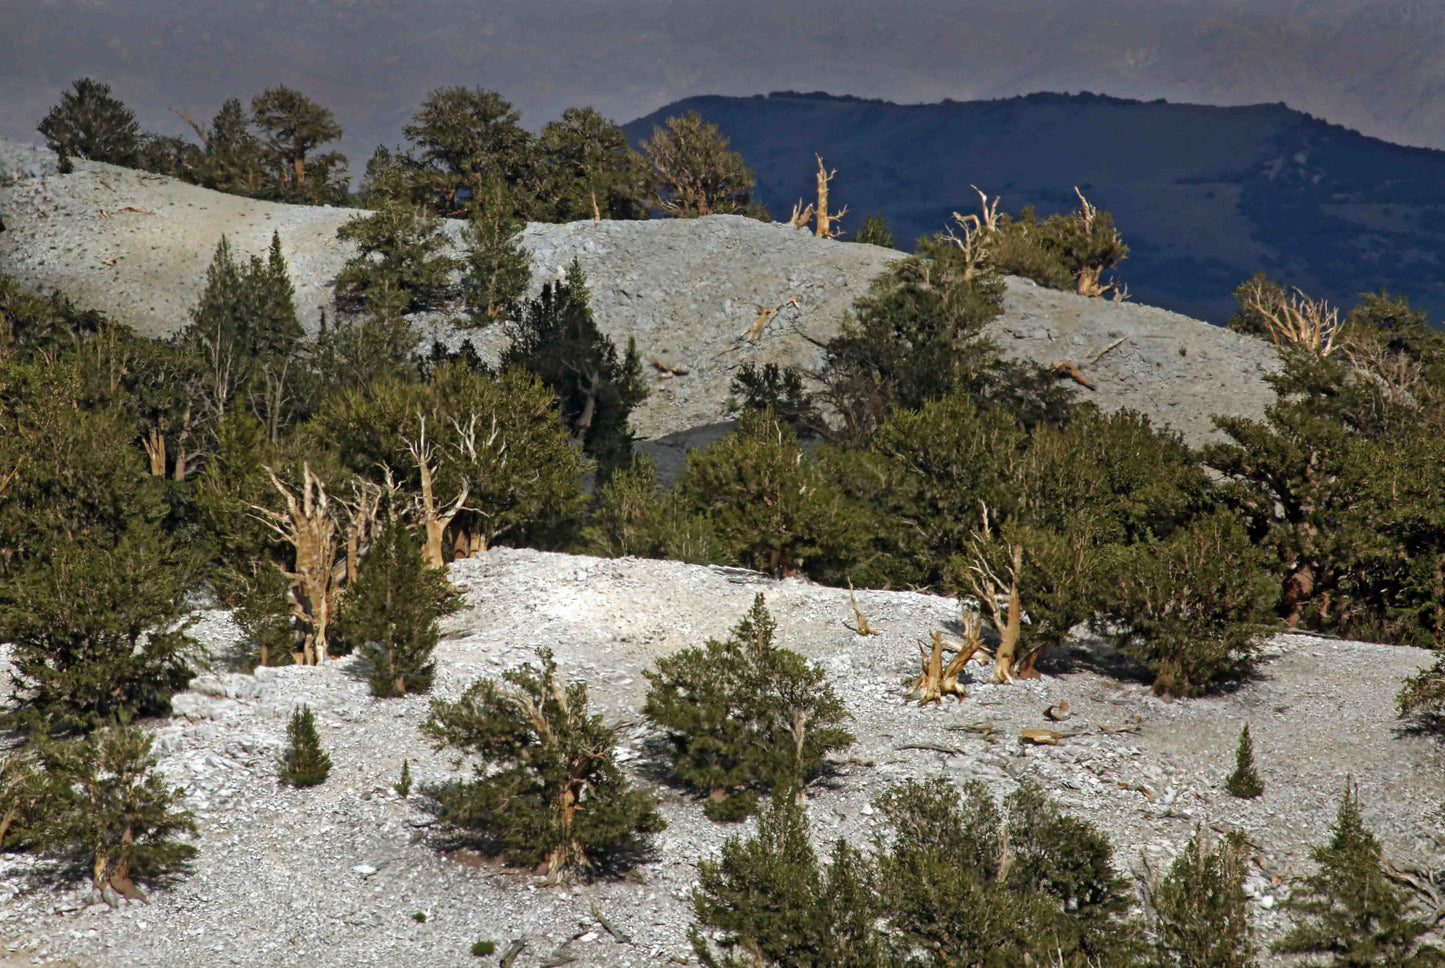 Great Basin Bristlecone Pine Pinus longaeva 10 Seeds  USA Company